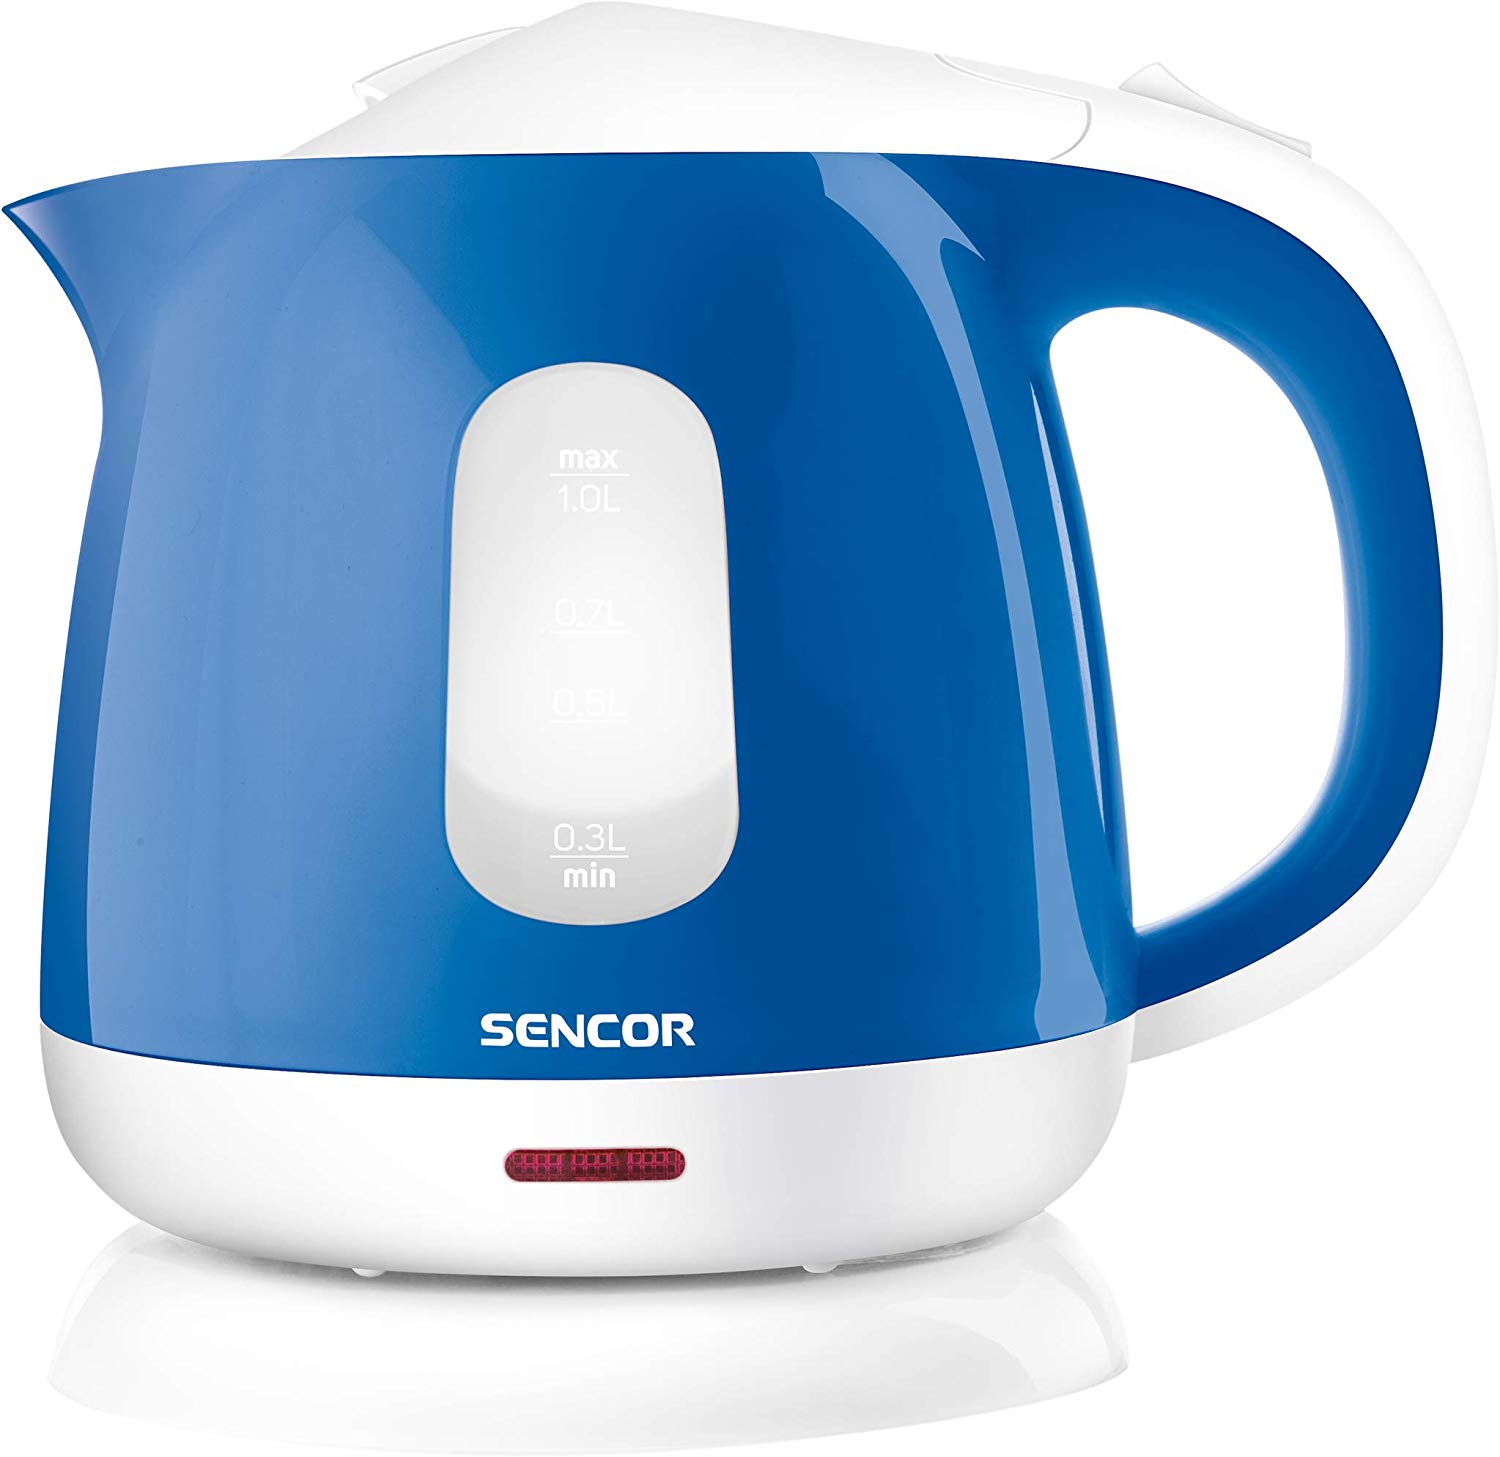 Sencor Swk 1012Bl Electric Kettle – Blue And White